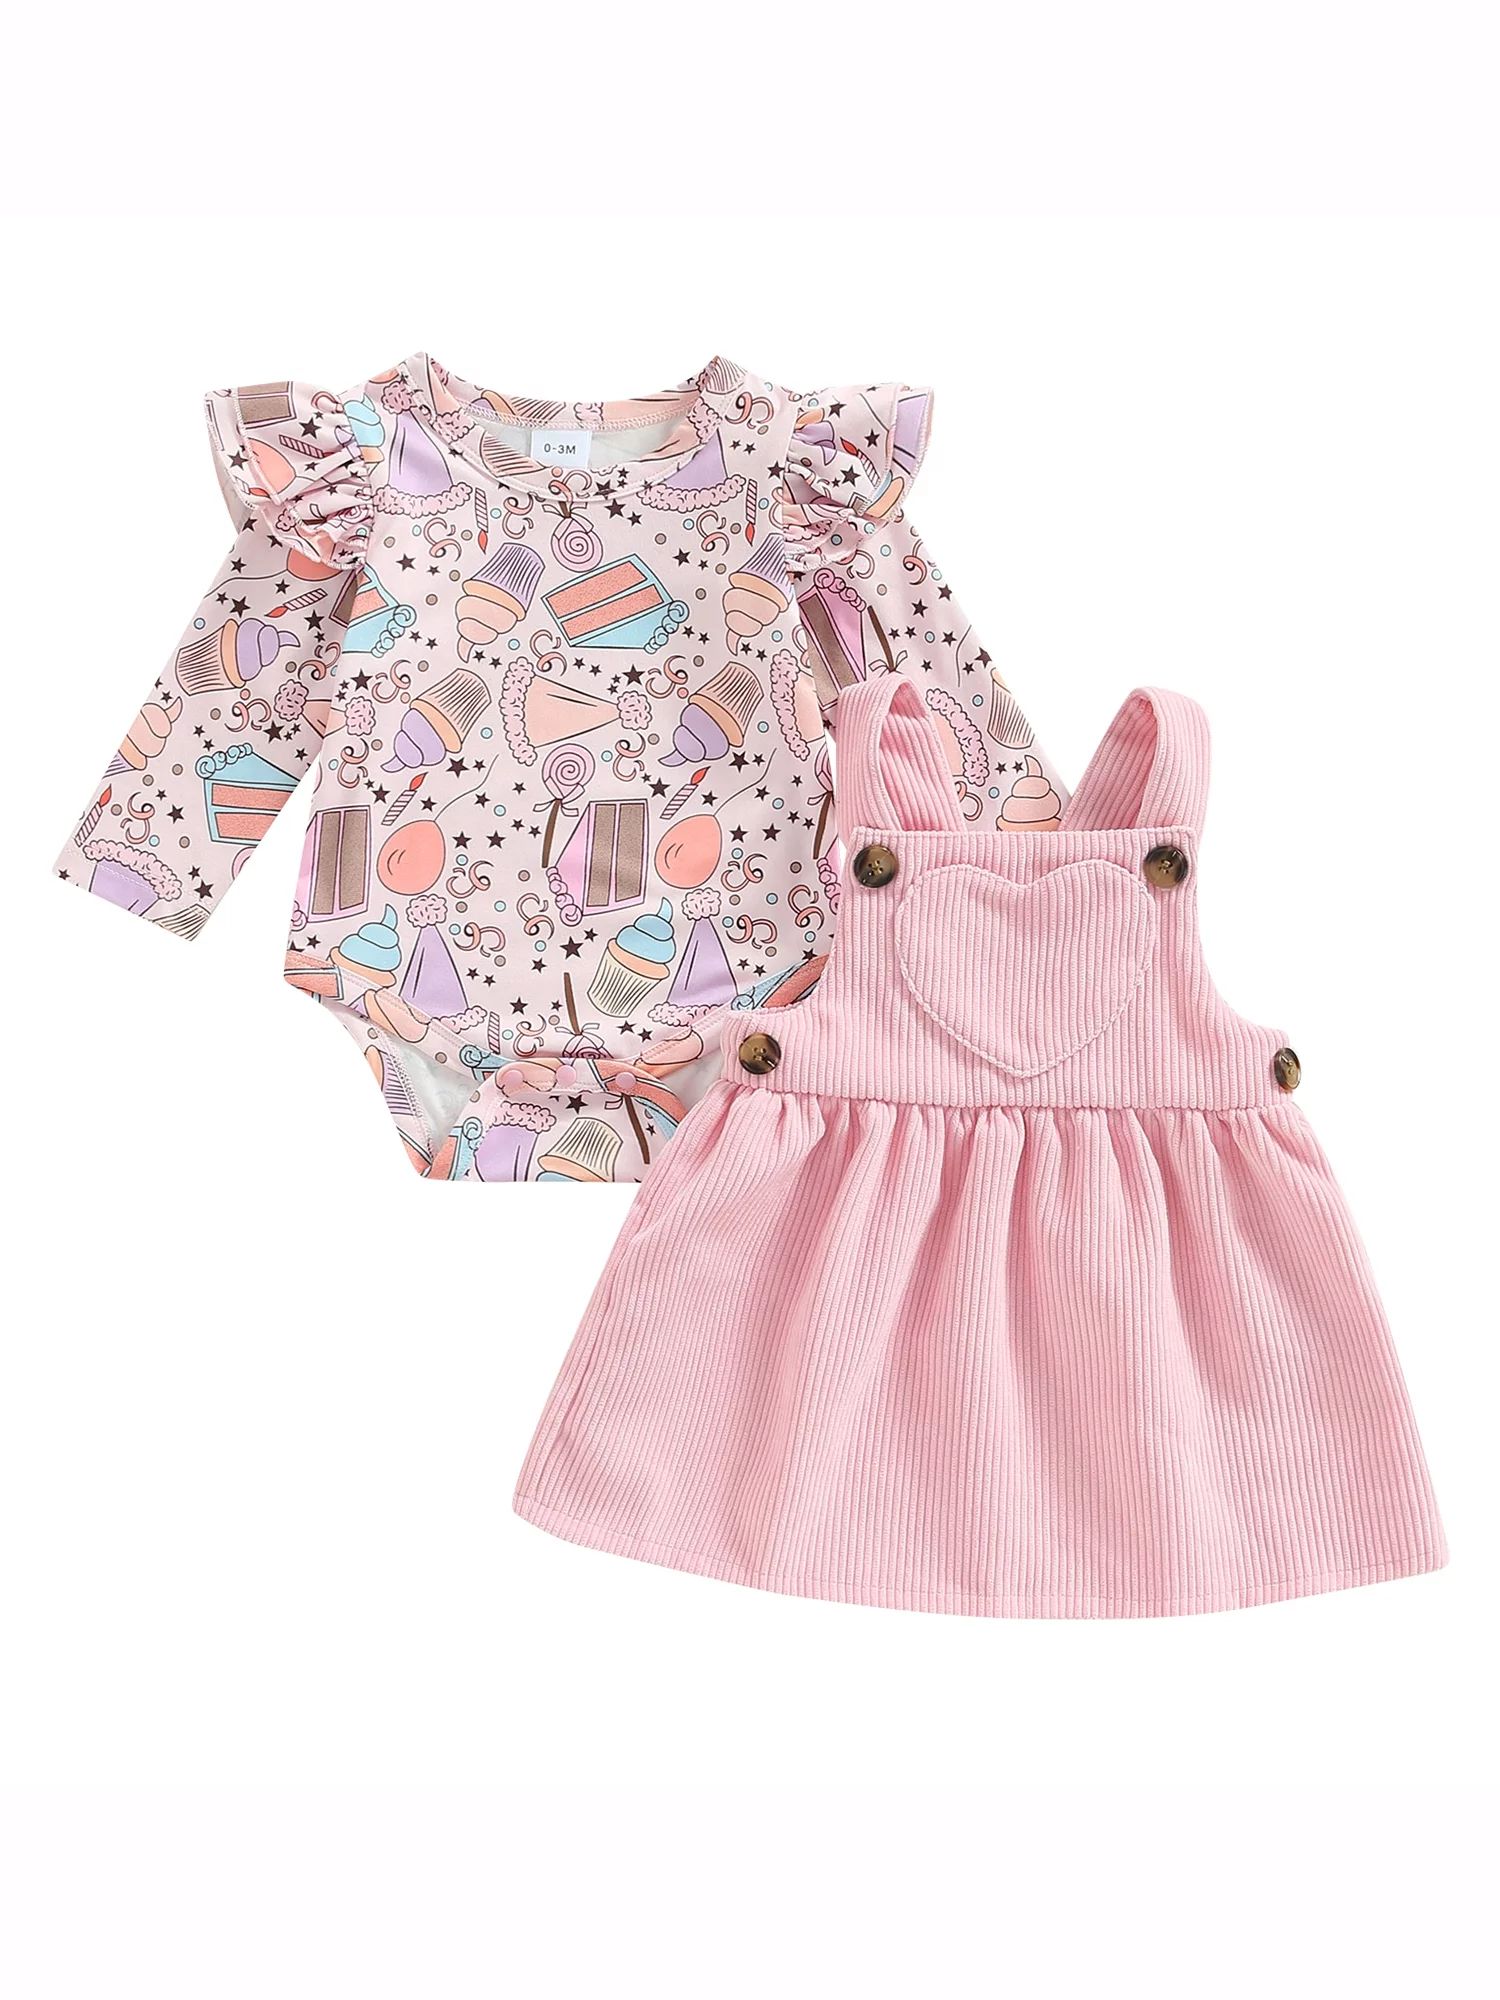 Musuos Baby Girls Long Sleeve Floral Romper Tops Corduroy Suspender Skirt Overall Dress | Walmart (US)